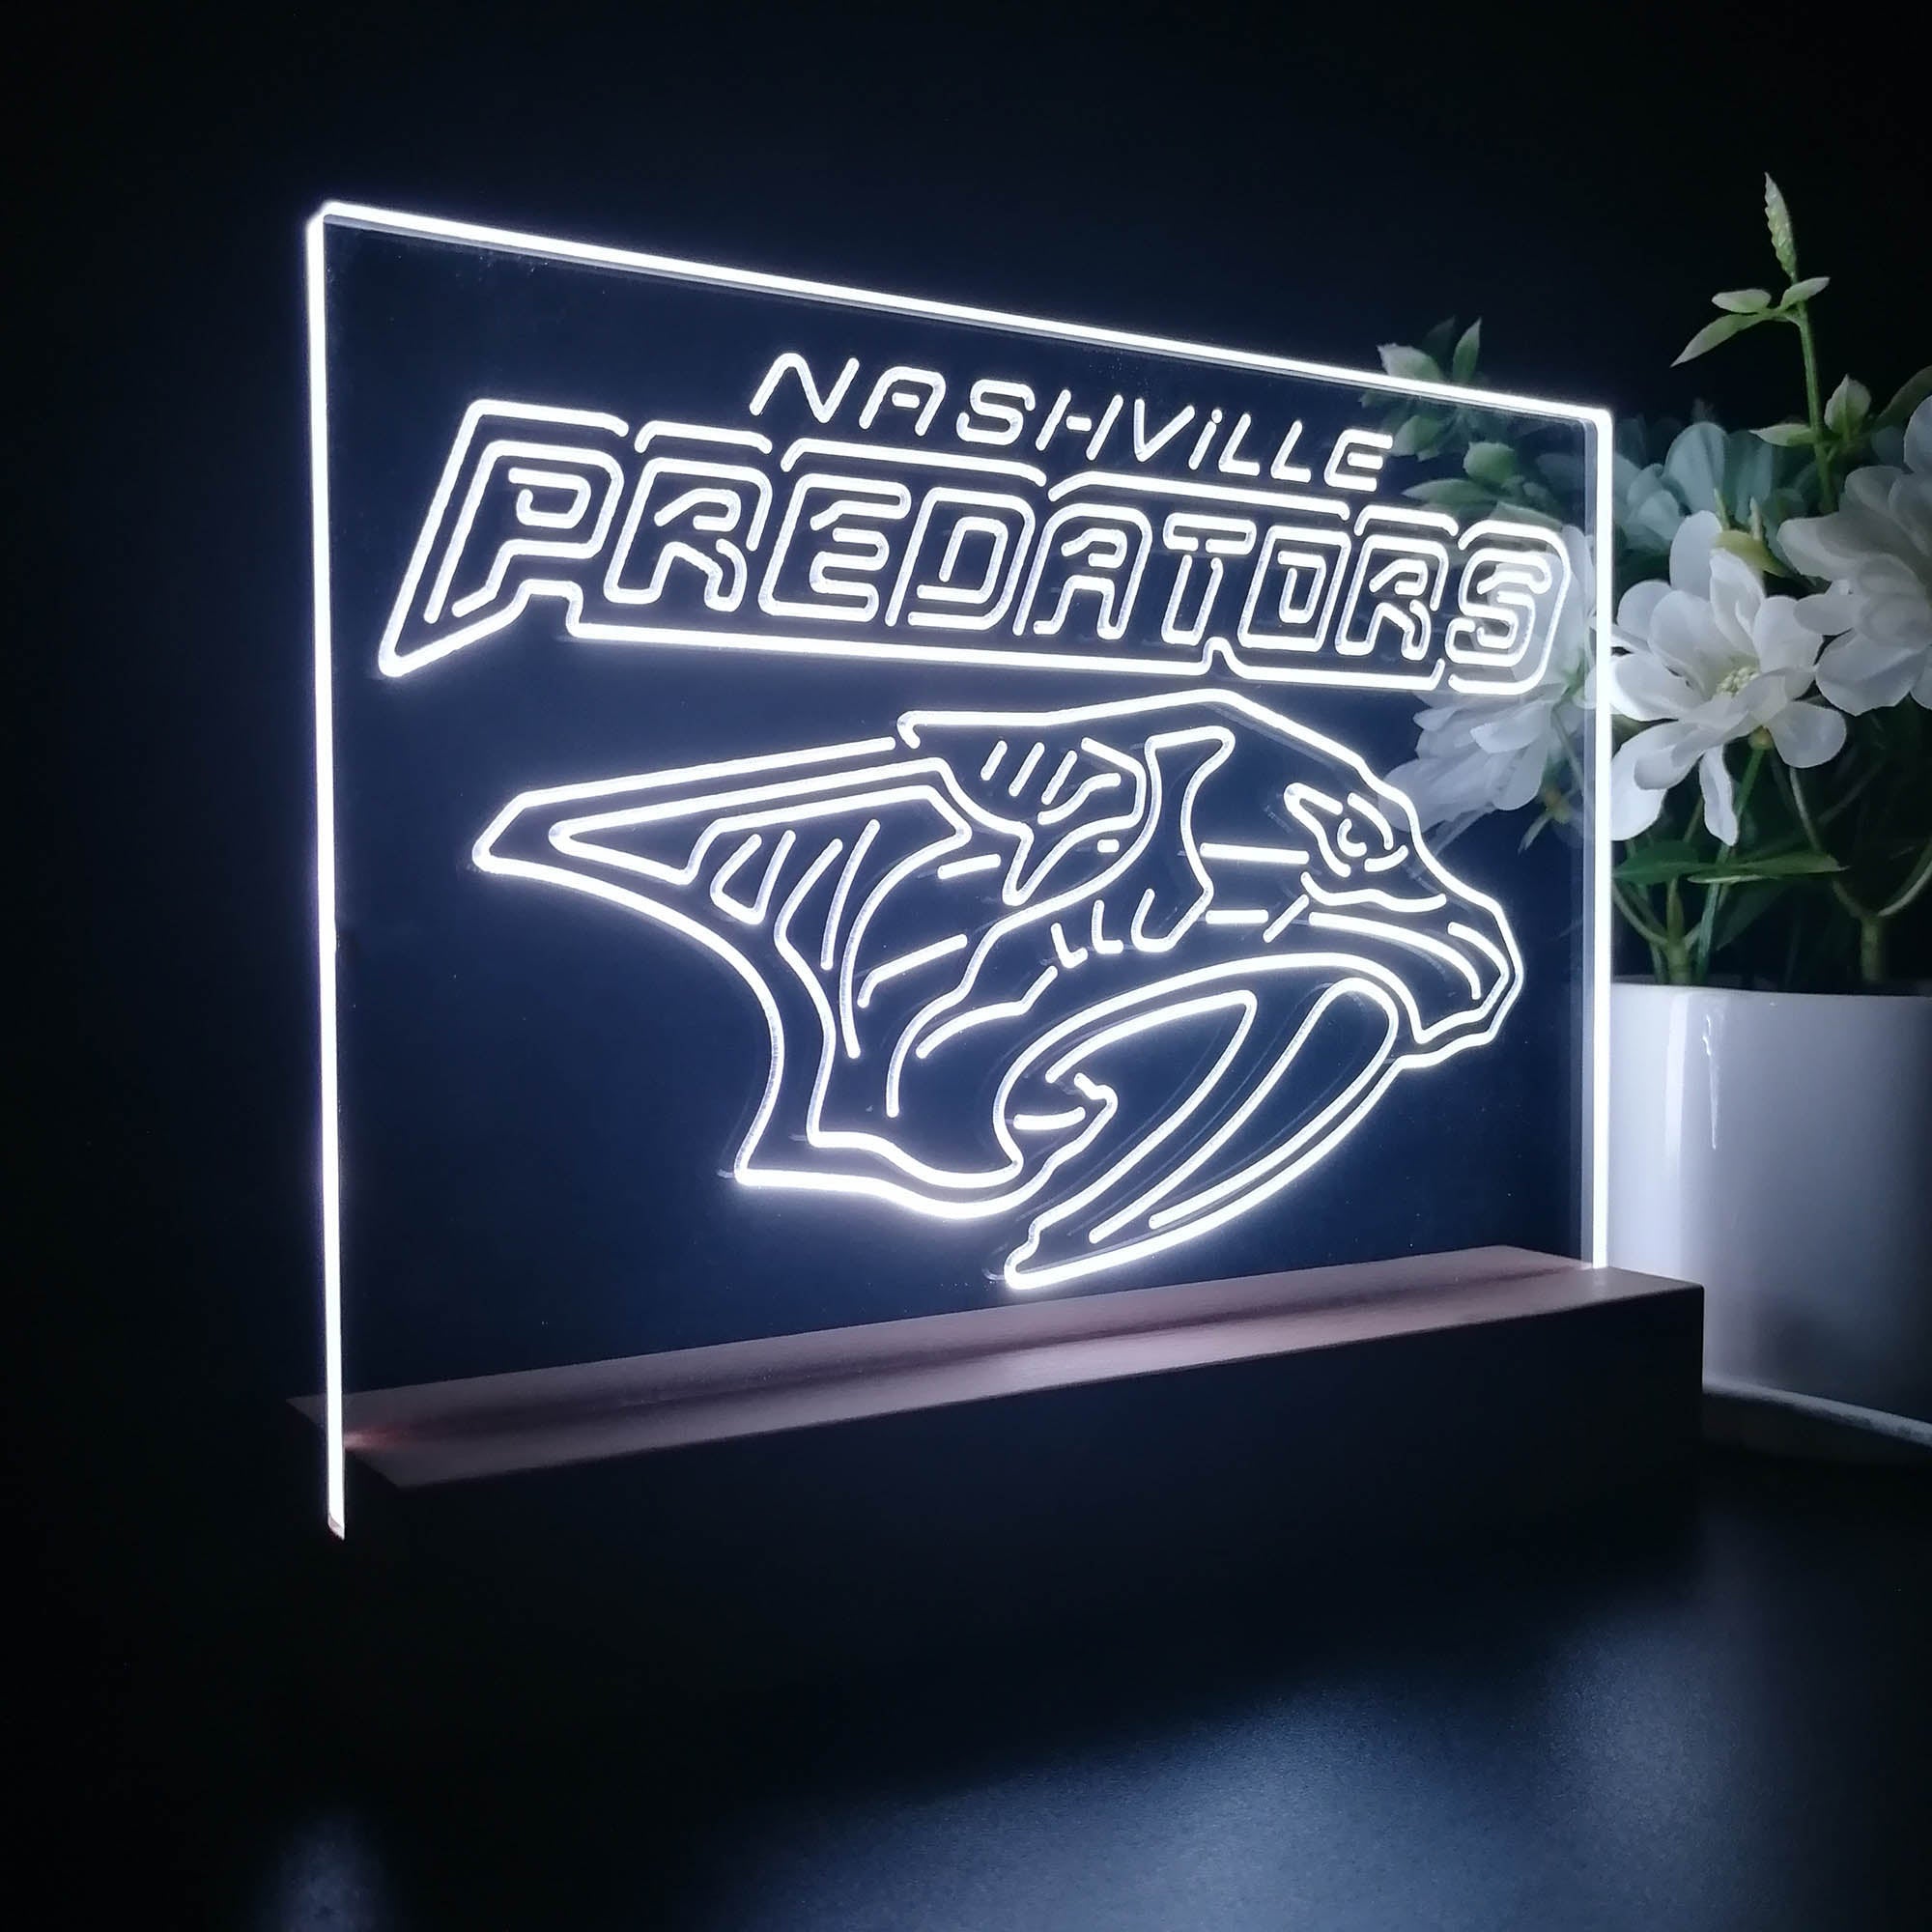 Nashville Predators Sport Team Night Light 3D Illusion Lamp